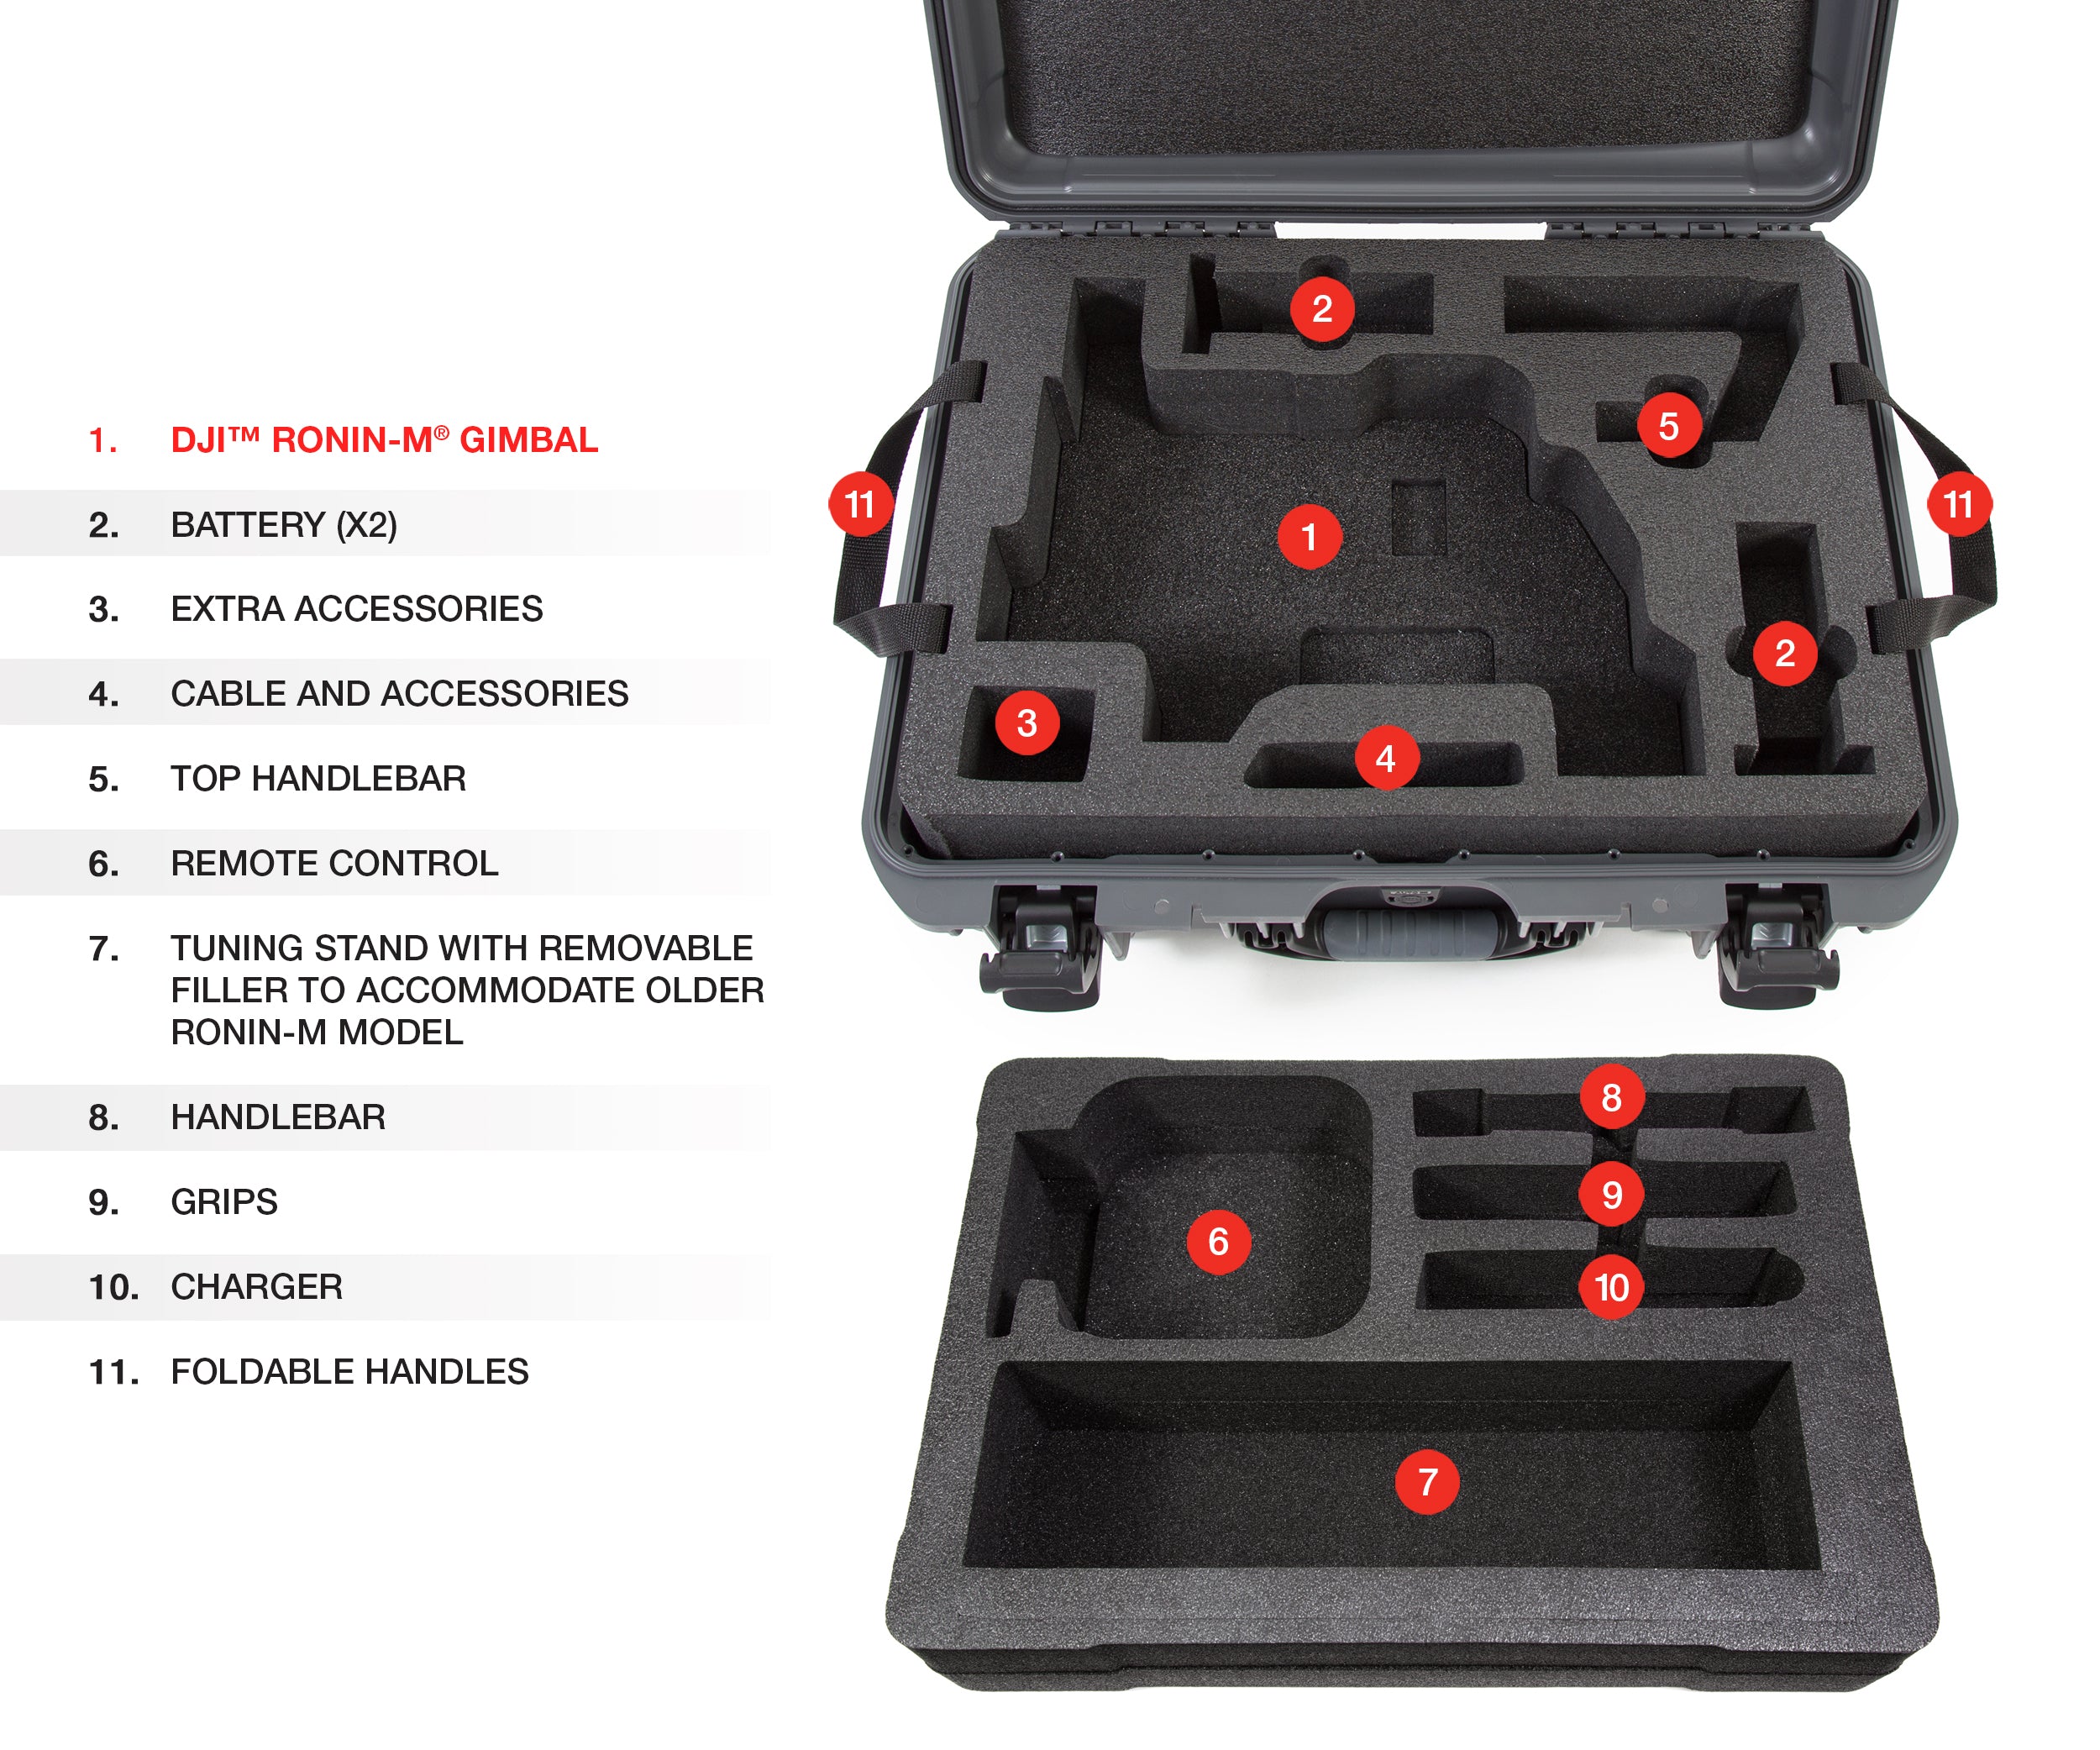 Nanuk 940 Ronin M Waterproof Hard Case with Custom Foam Insert for DJI Ronin M Gimbal Stabilizer System - Graphite